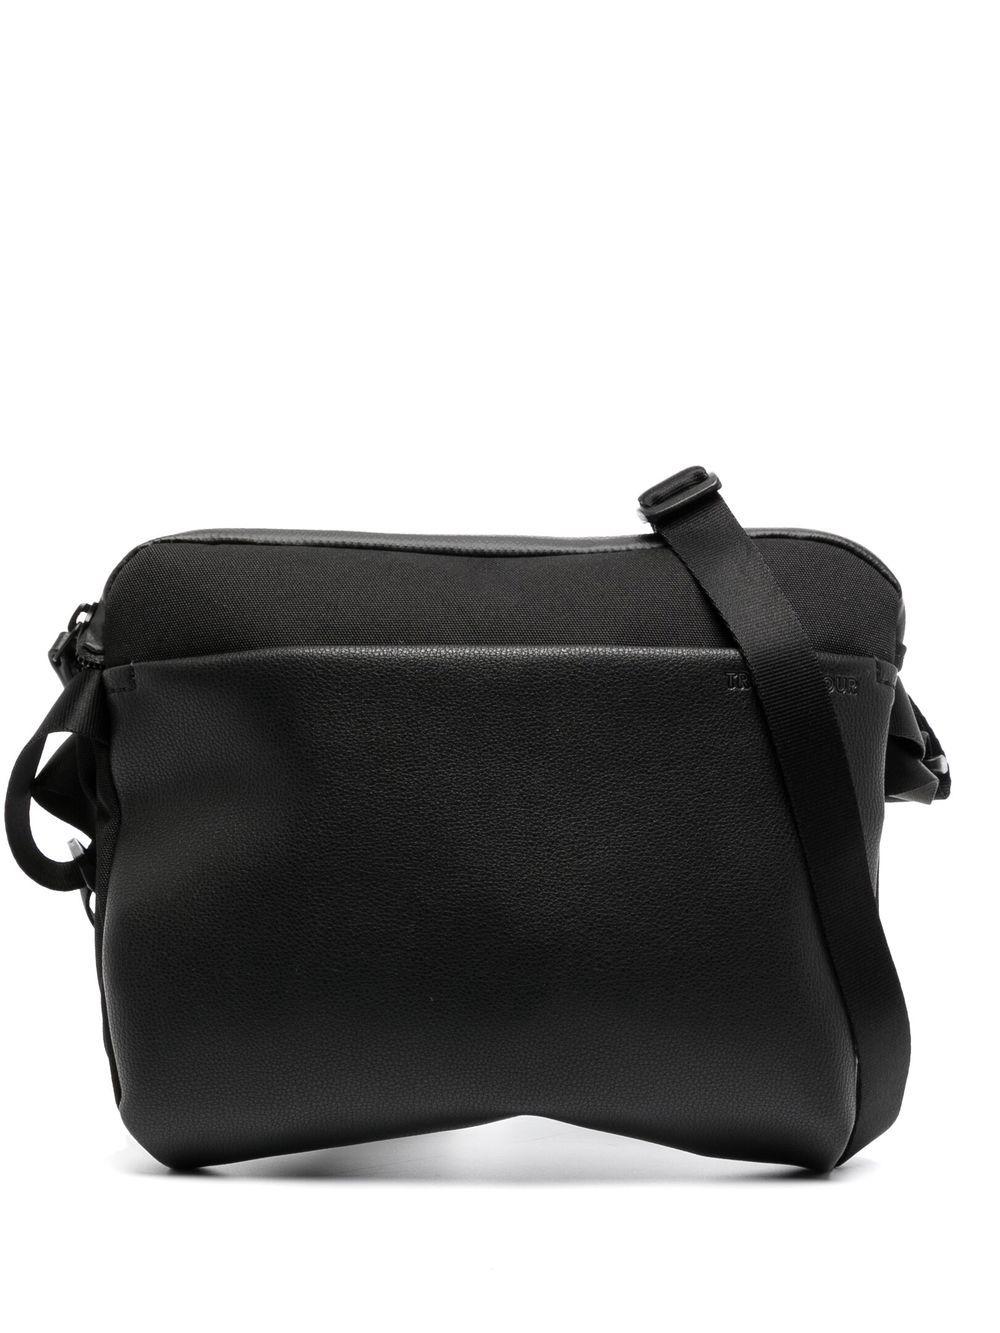 Troubadour Faux-leather Messenger Bag in Black | Lyst